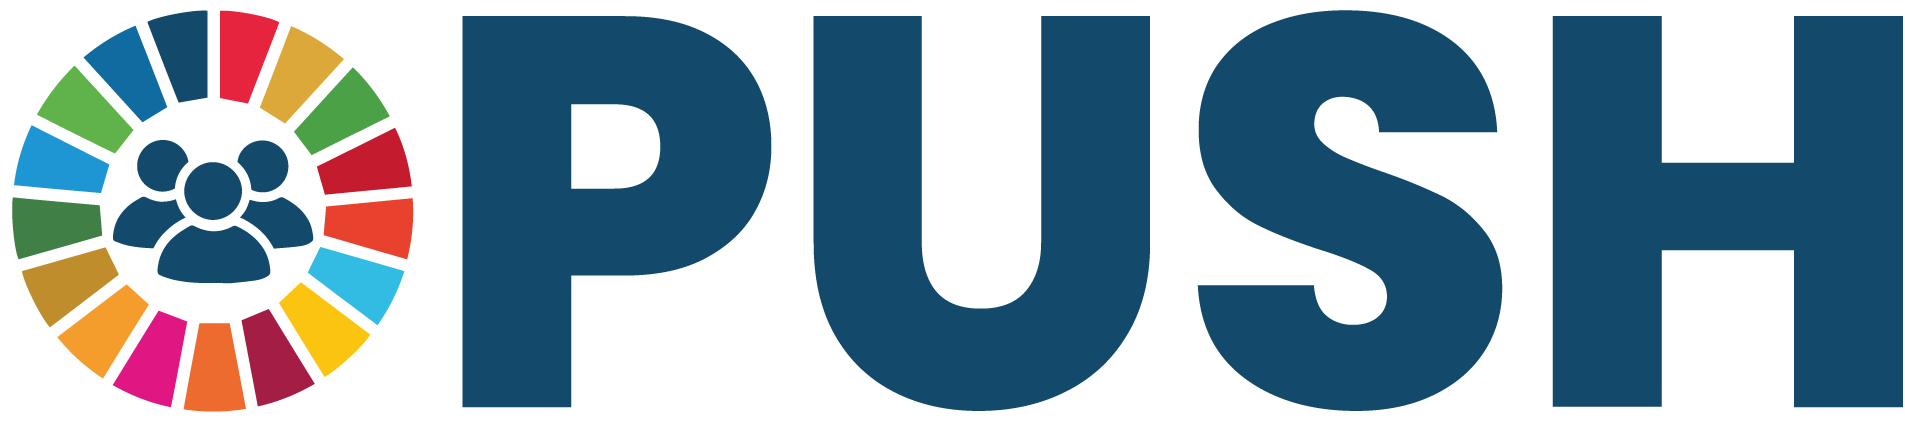 opush logo